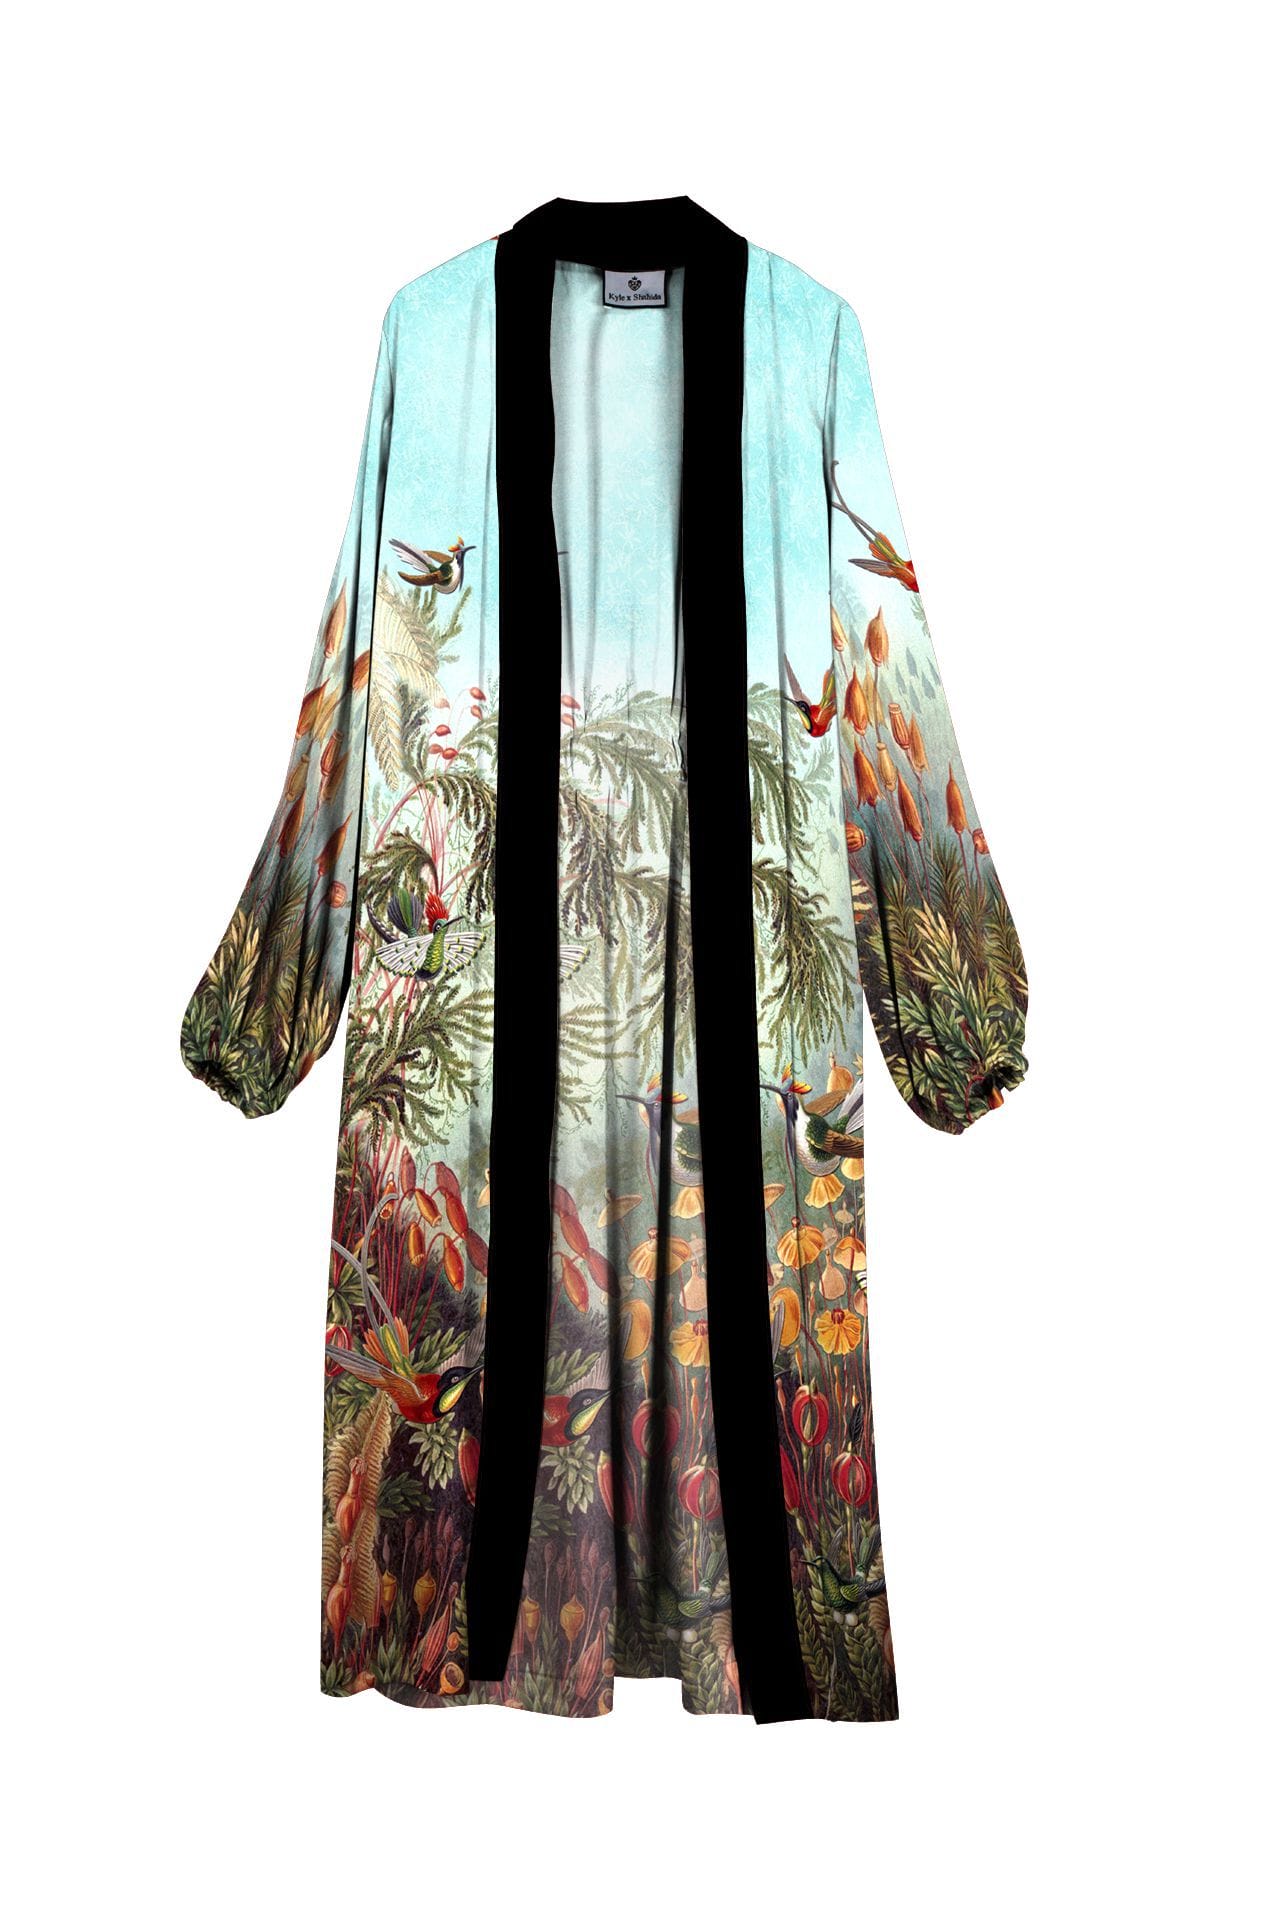 "kimono silk robe women's" "Kyle X Shahida" "womens long kimono" "long kimono robe womens" 